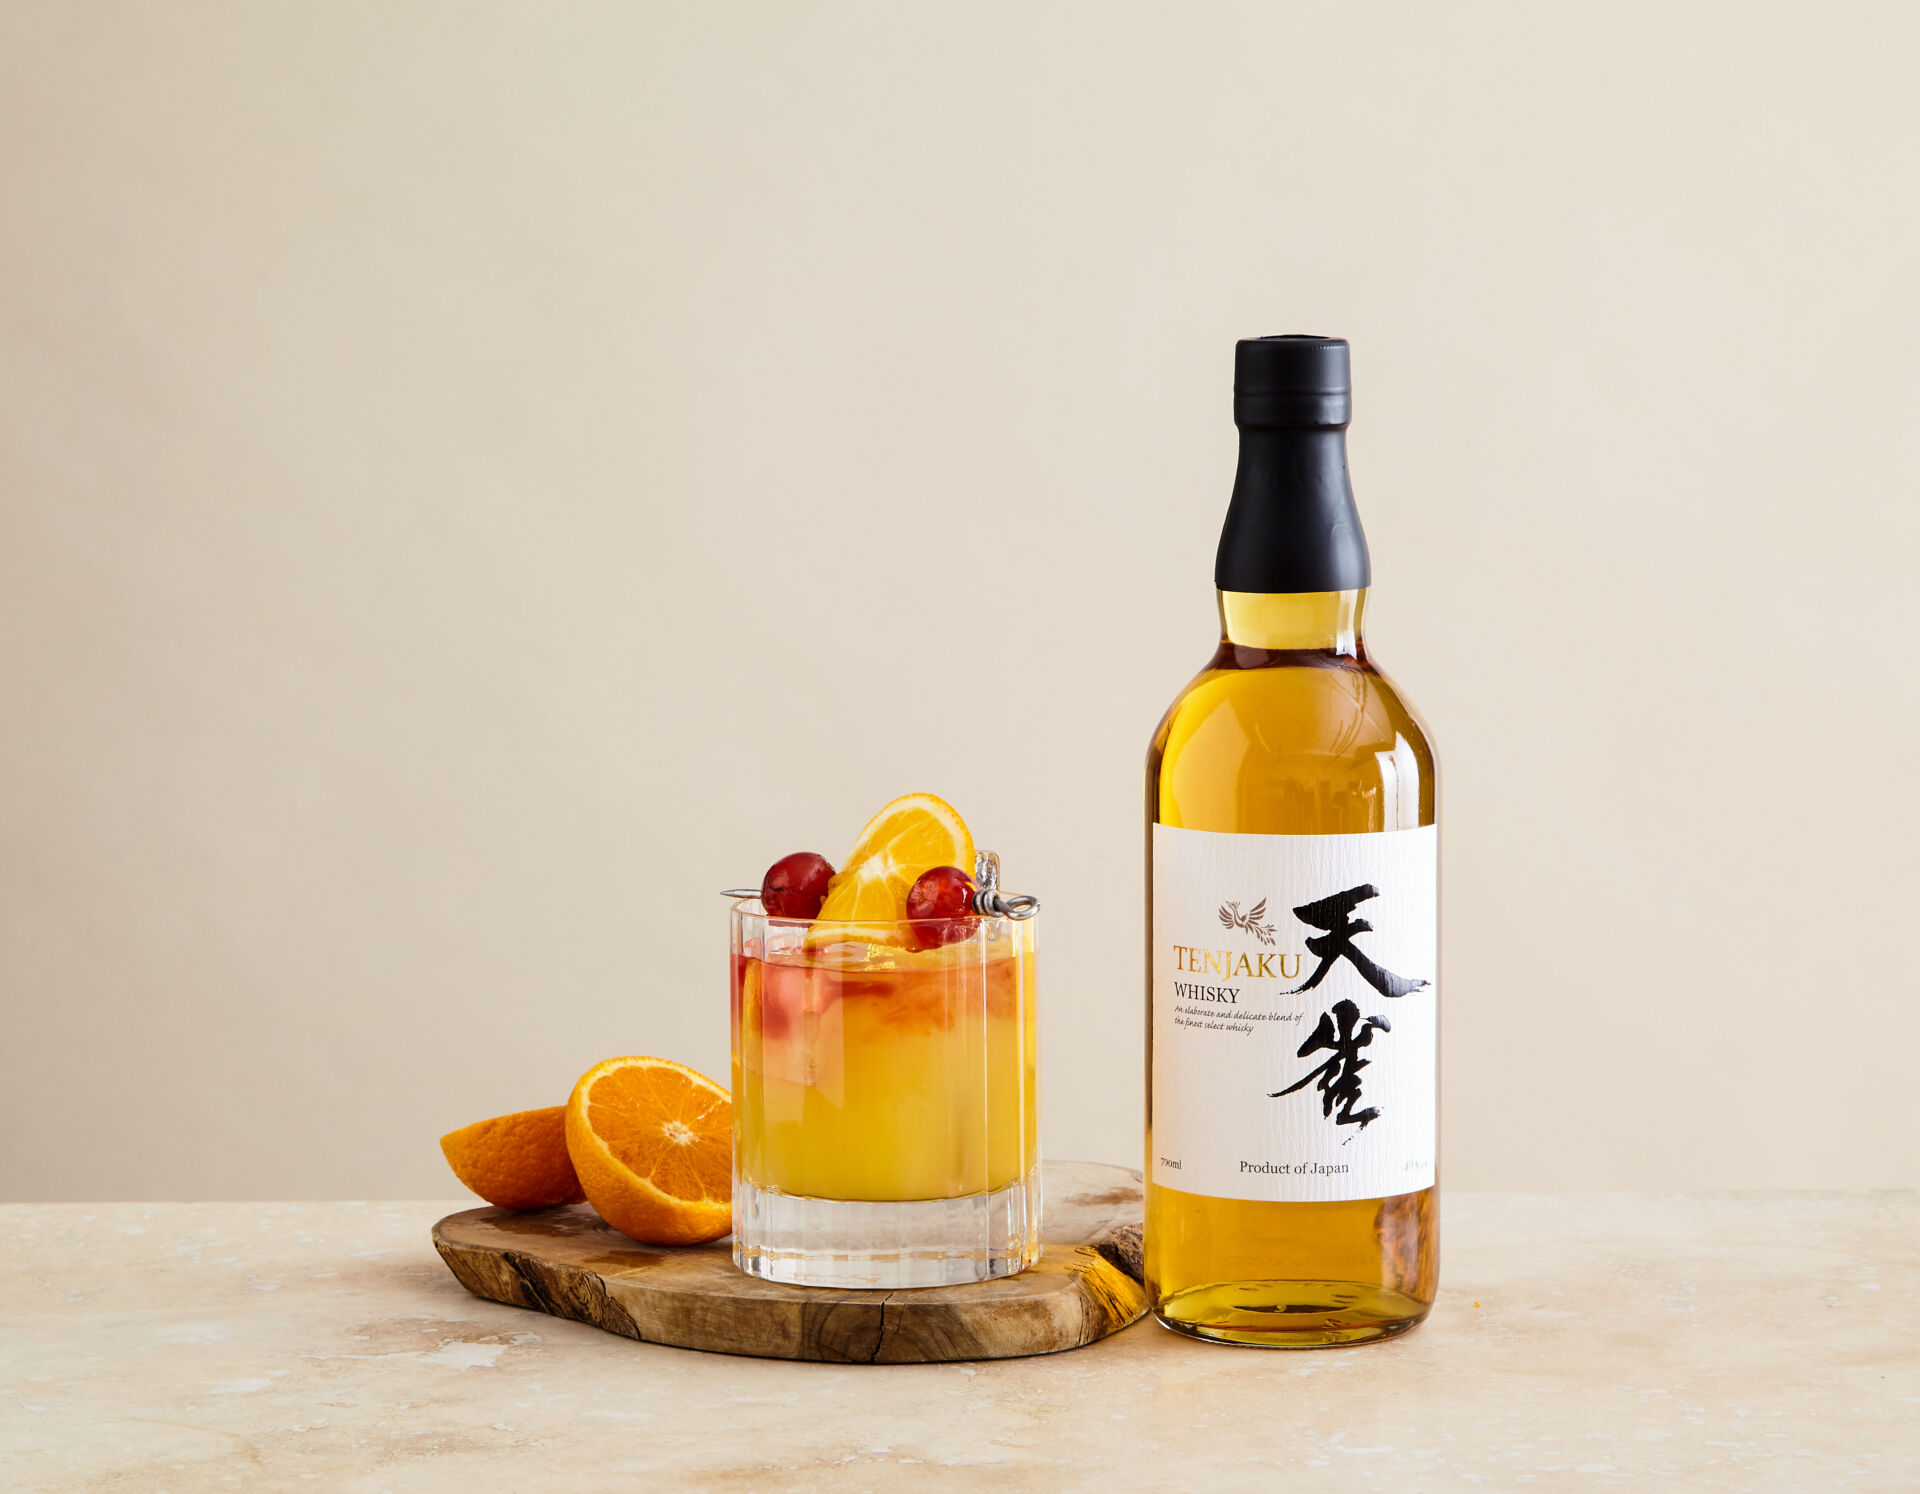 Виски Tenjaku Pure Malt. Японский виски Cherry Tenjaku. Пюре Молт виски Япония. Whisky Tenjaku отзывы. Tenjaku 0.7